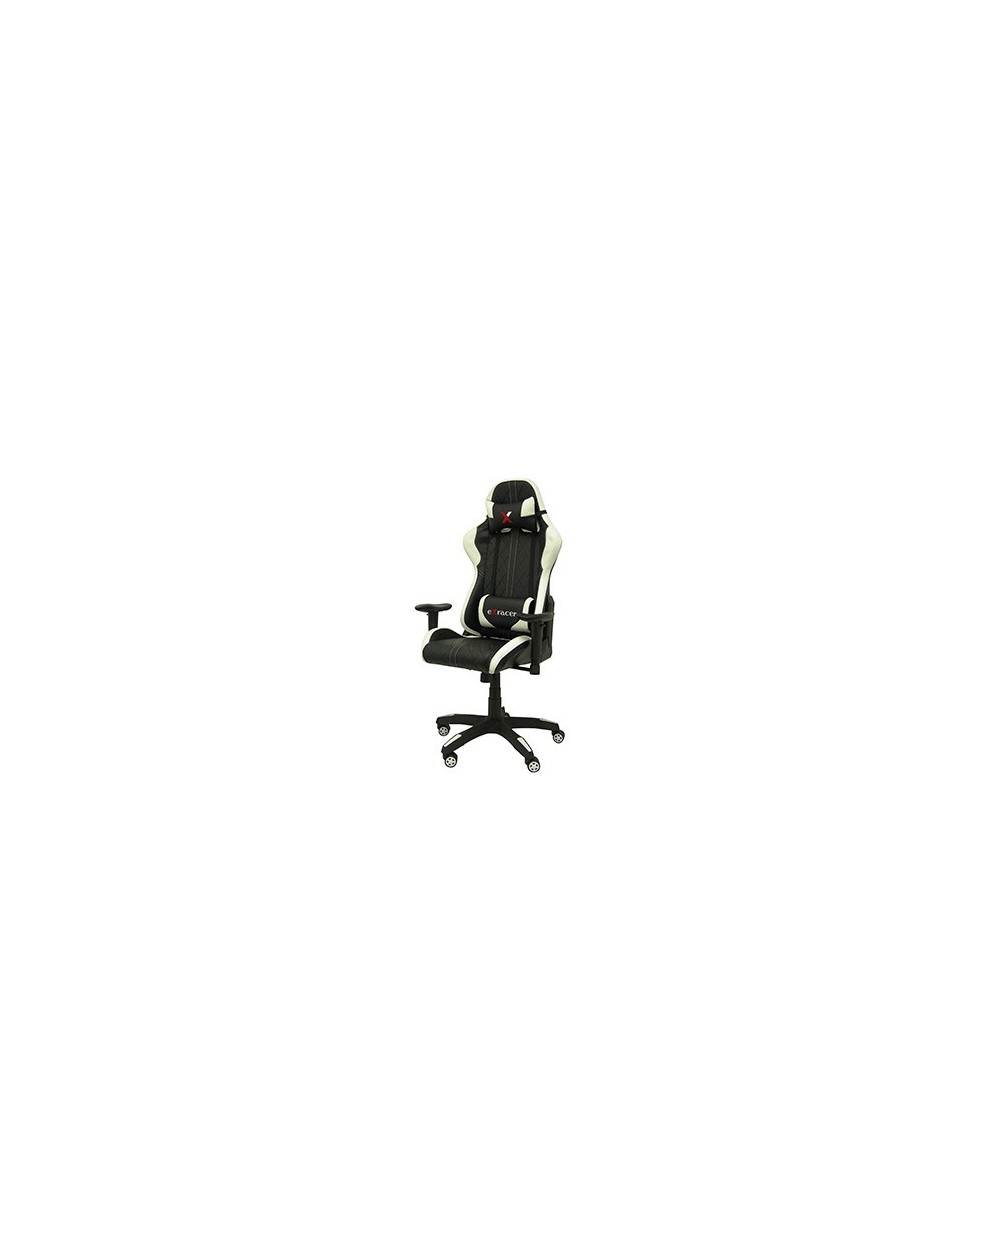 Silla pyc gaming chair giratoria similpiel regulable en altura negra 120080x670x670 mm